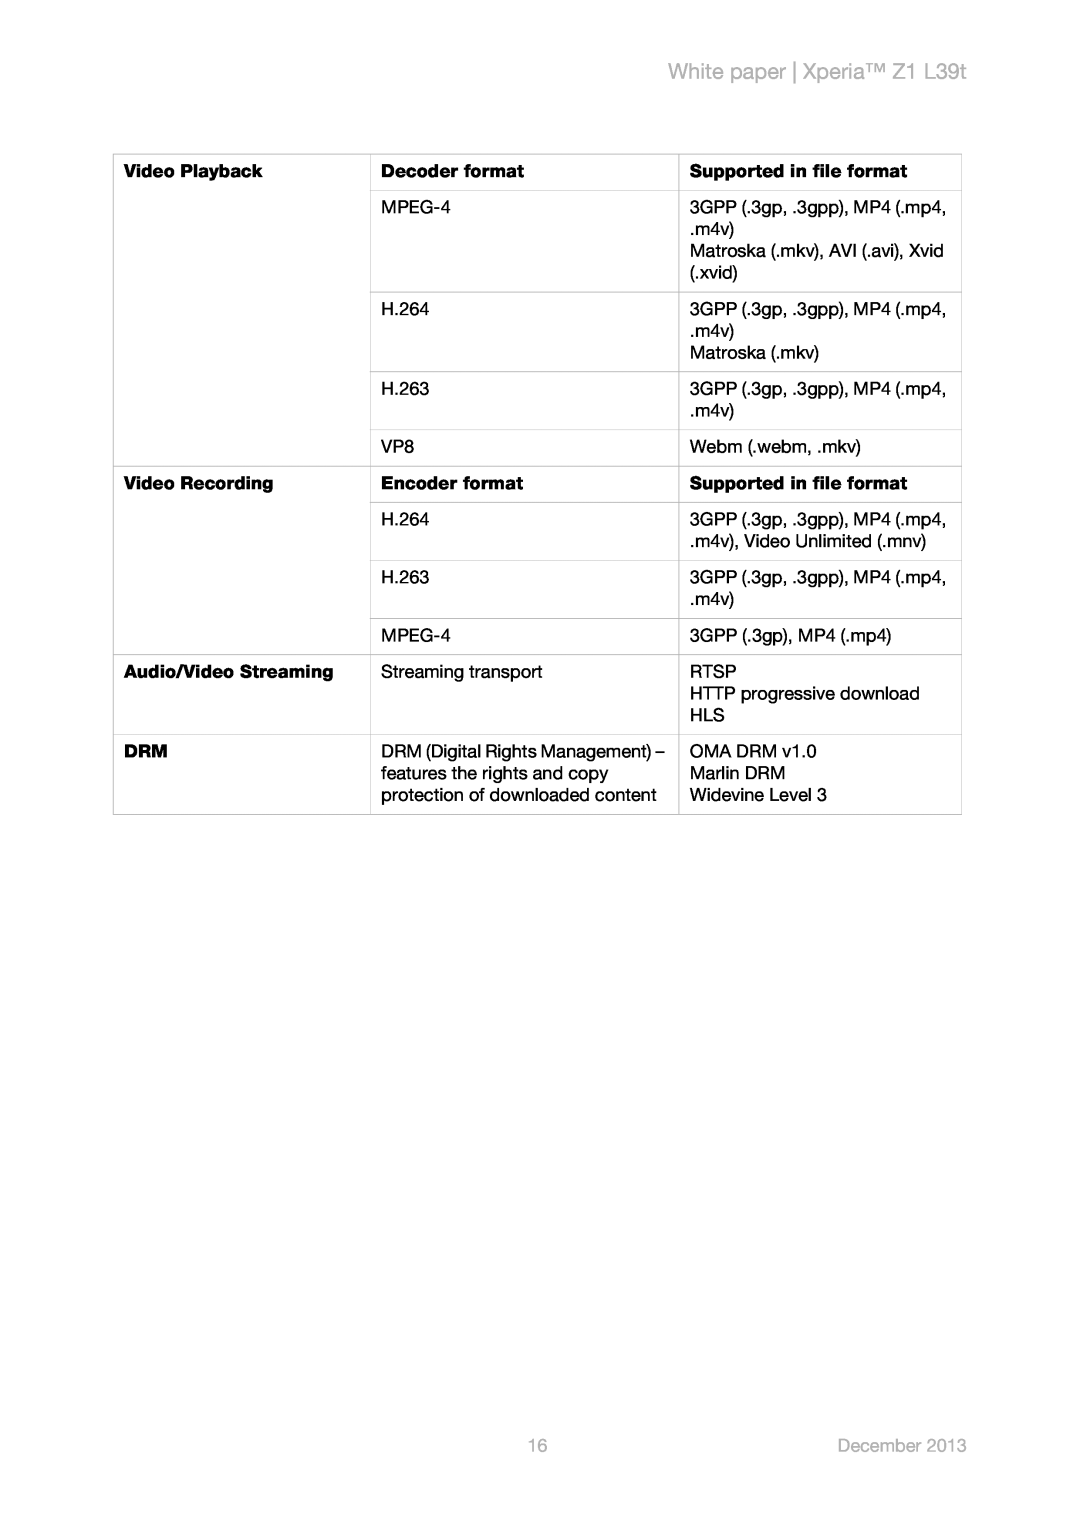 Sony manual White paper Xperia Z1 L39t, December 